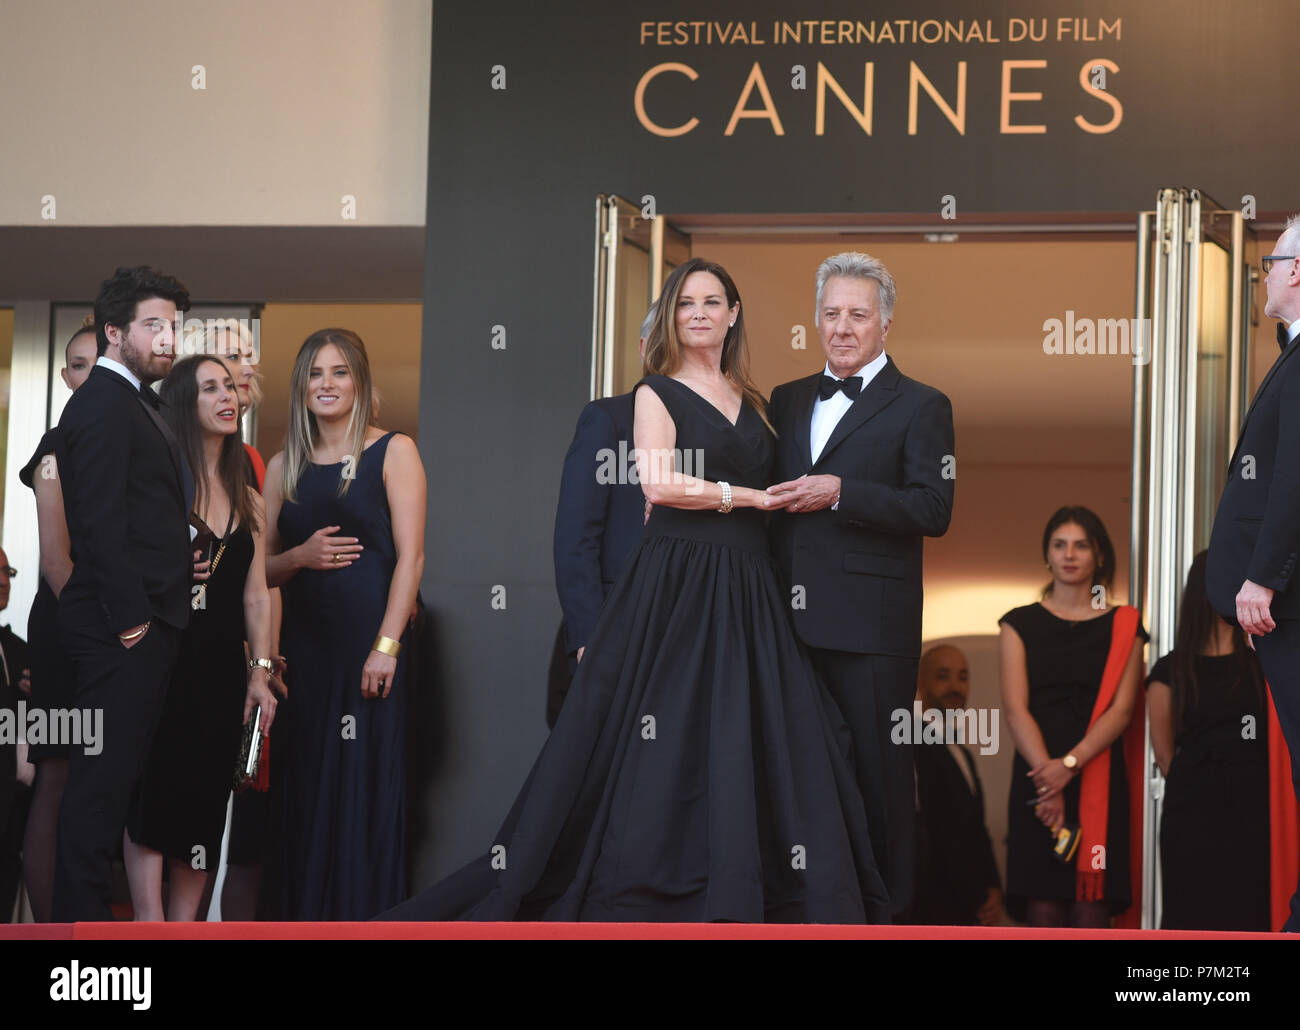 21 maggio 2017 - Cannes, Francia: Dustin Hoffman e sua moglie Lisa Hoffman assistere "l'Meyerowitz storie 'premiere durante il settantesimo Cannes film festival. Dustin Hoffman et Lisa Hoffman Lors du 70eme Festival de Cannes. *** La Francia / NESSUNA VENDITA A MEDIA FRANCESI *** Foto Stock